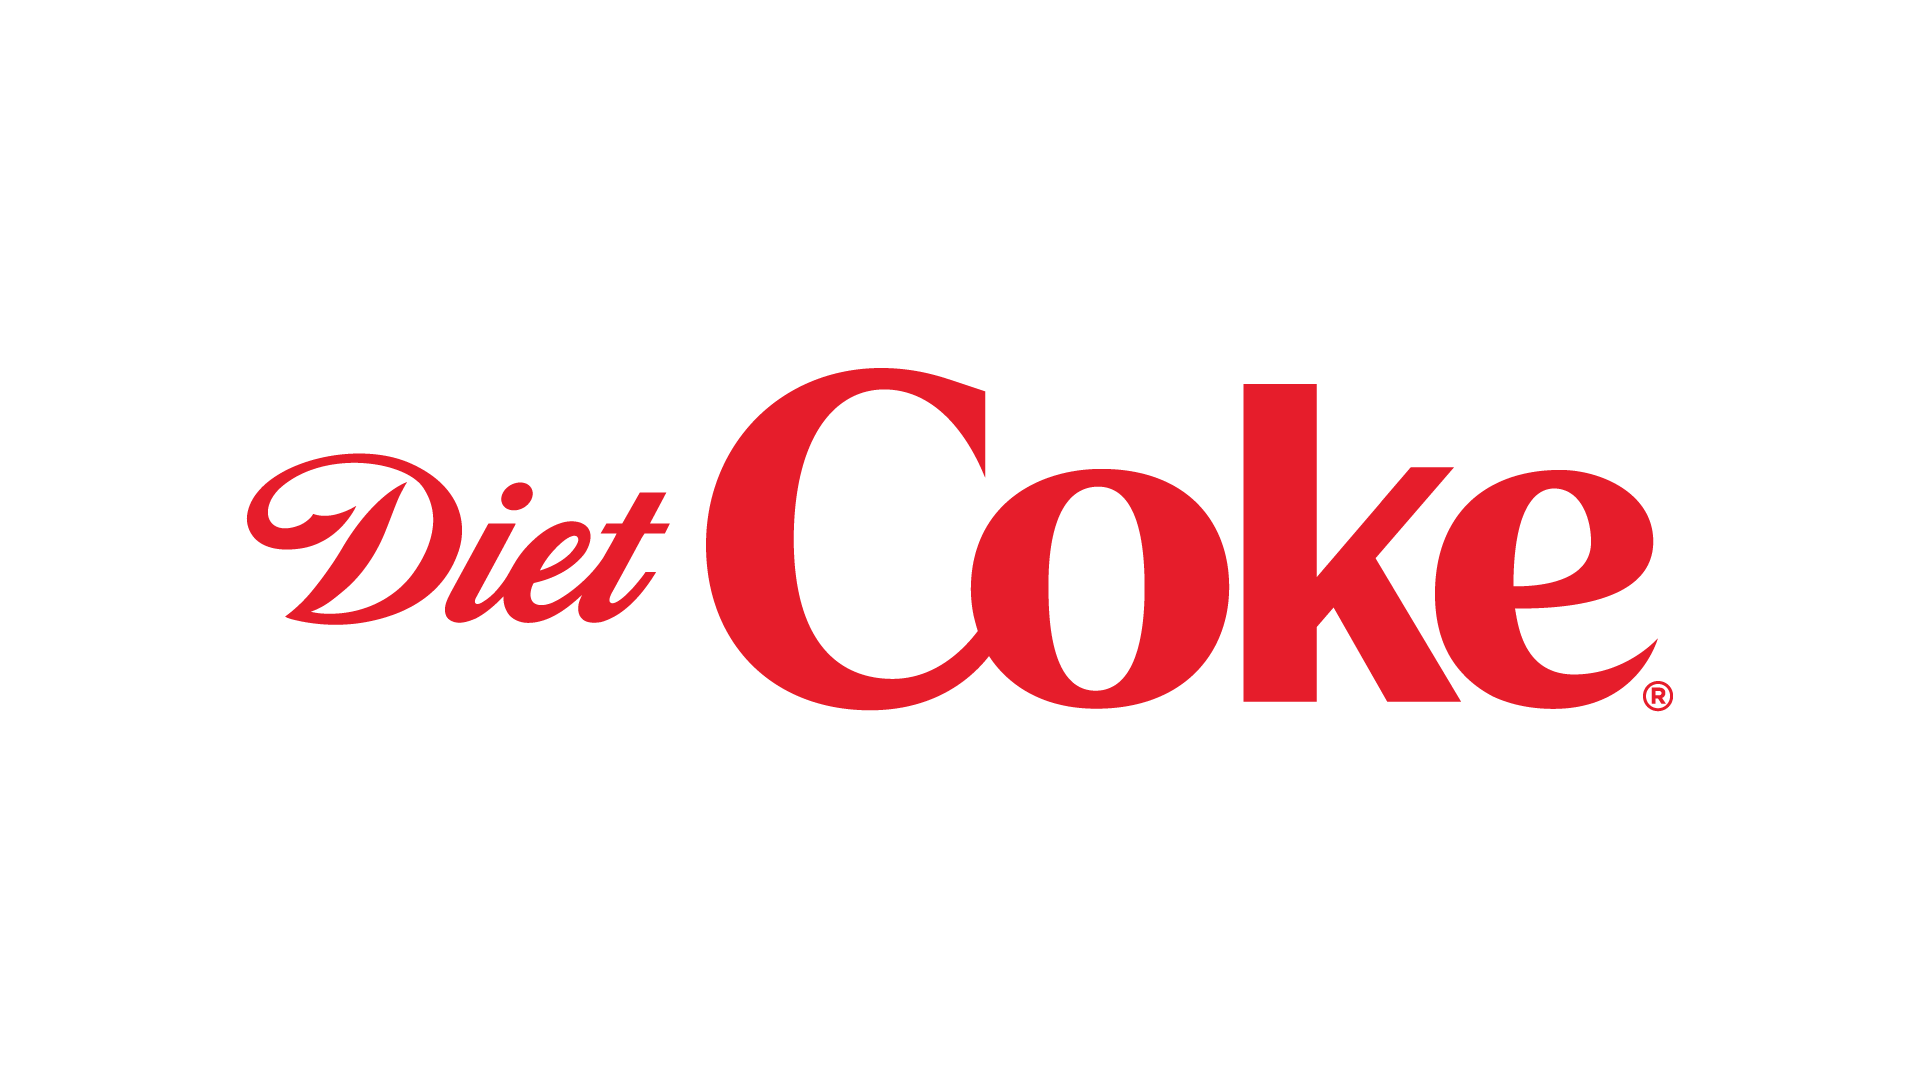 Diet Coke Logo - Diet coke logo png 4 » PNG Image